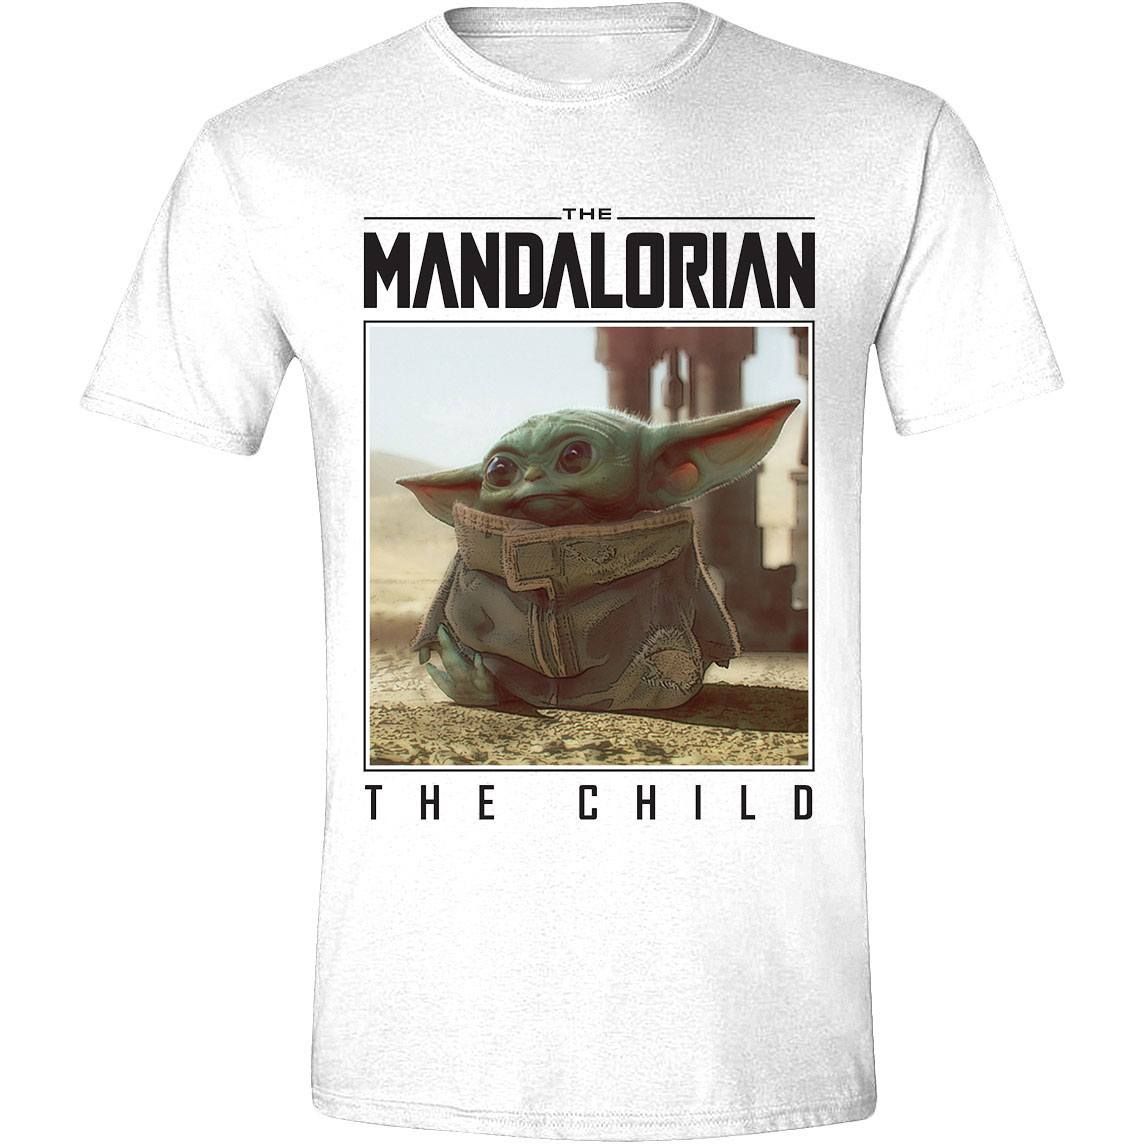 Star Wars The Mandalorian T-Shirt The Child Photo Size L PCMerch